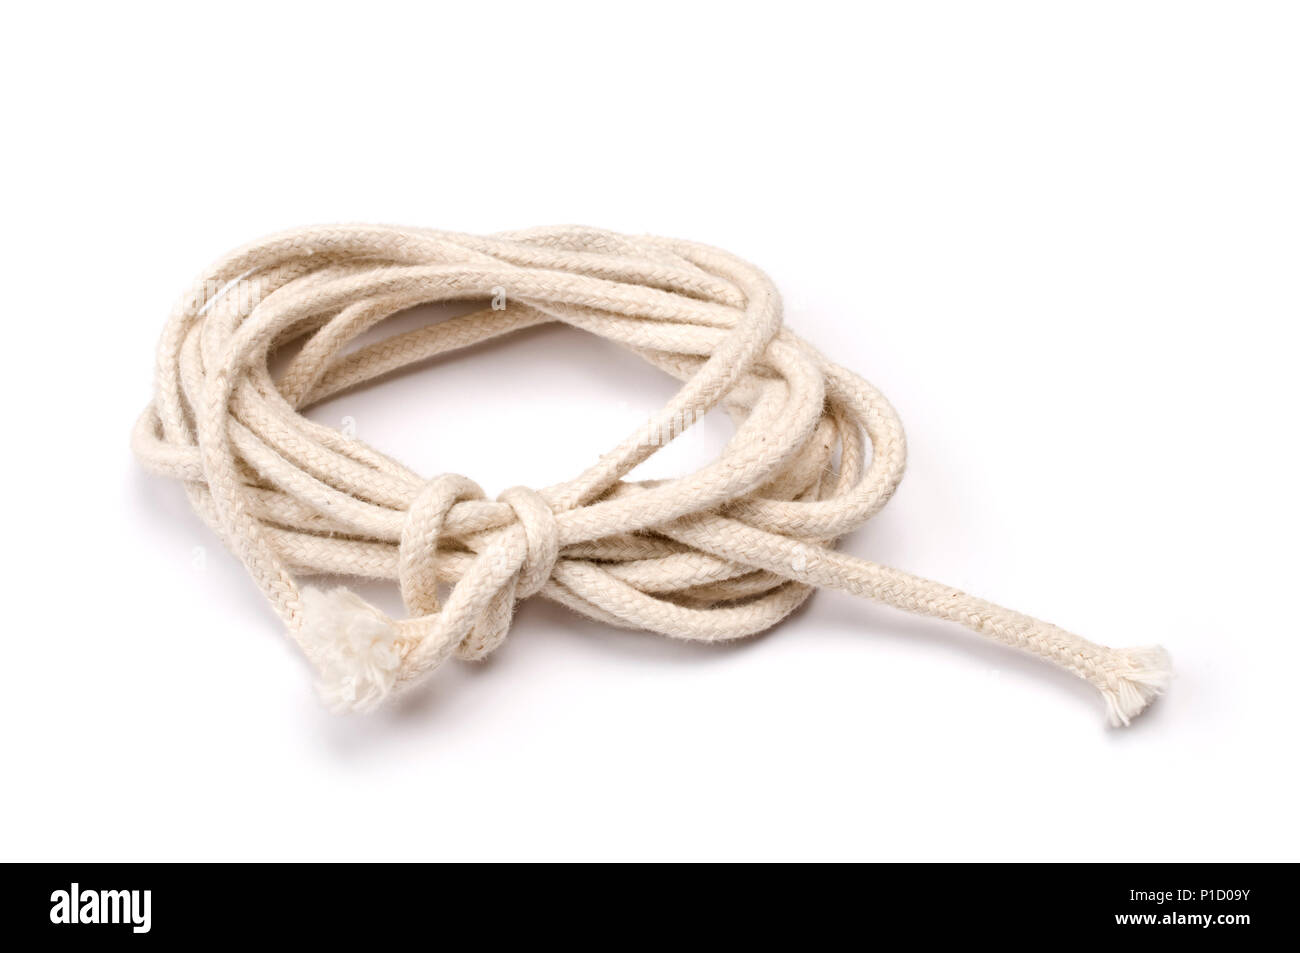 Tangled rope on white background. Stock Photo